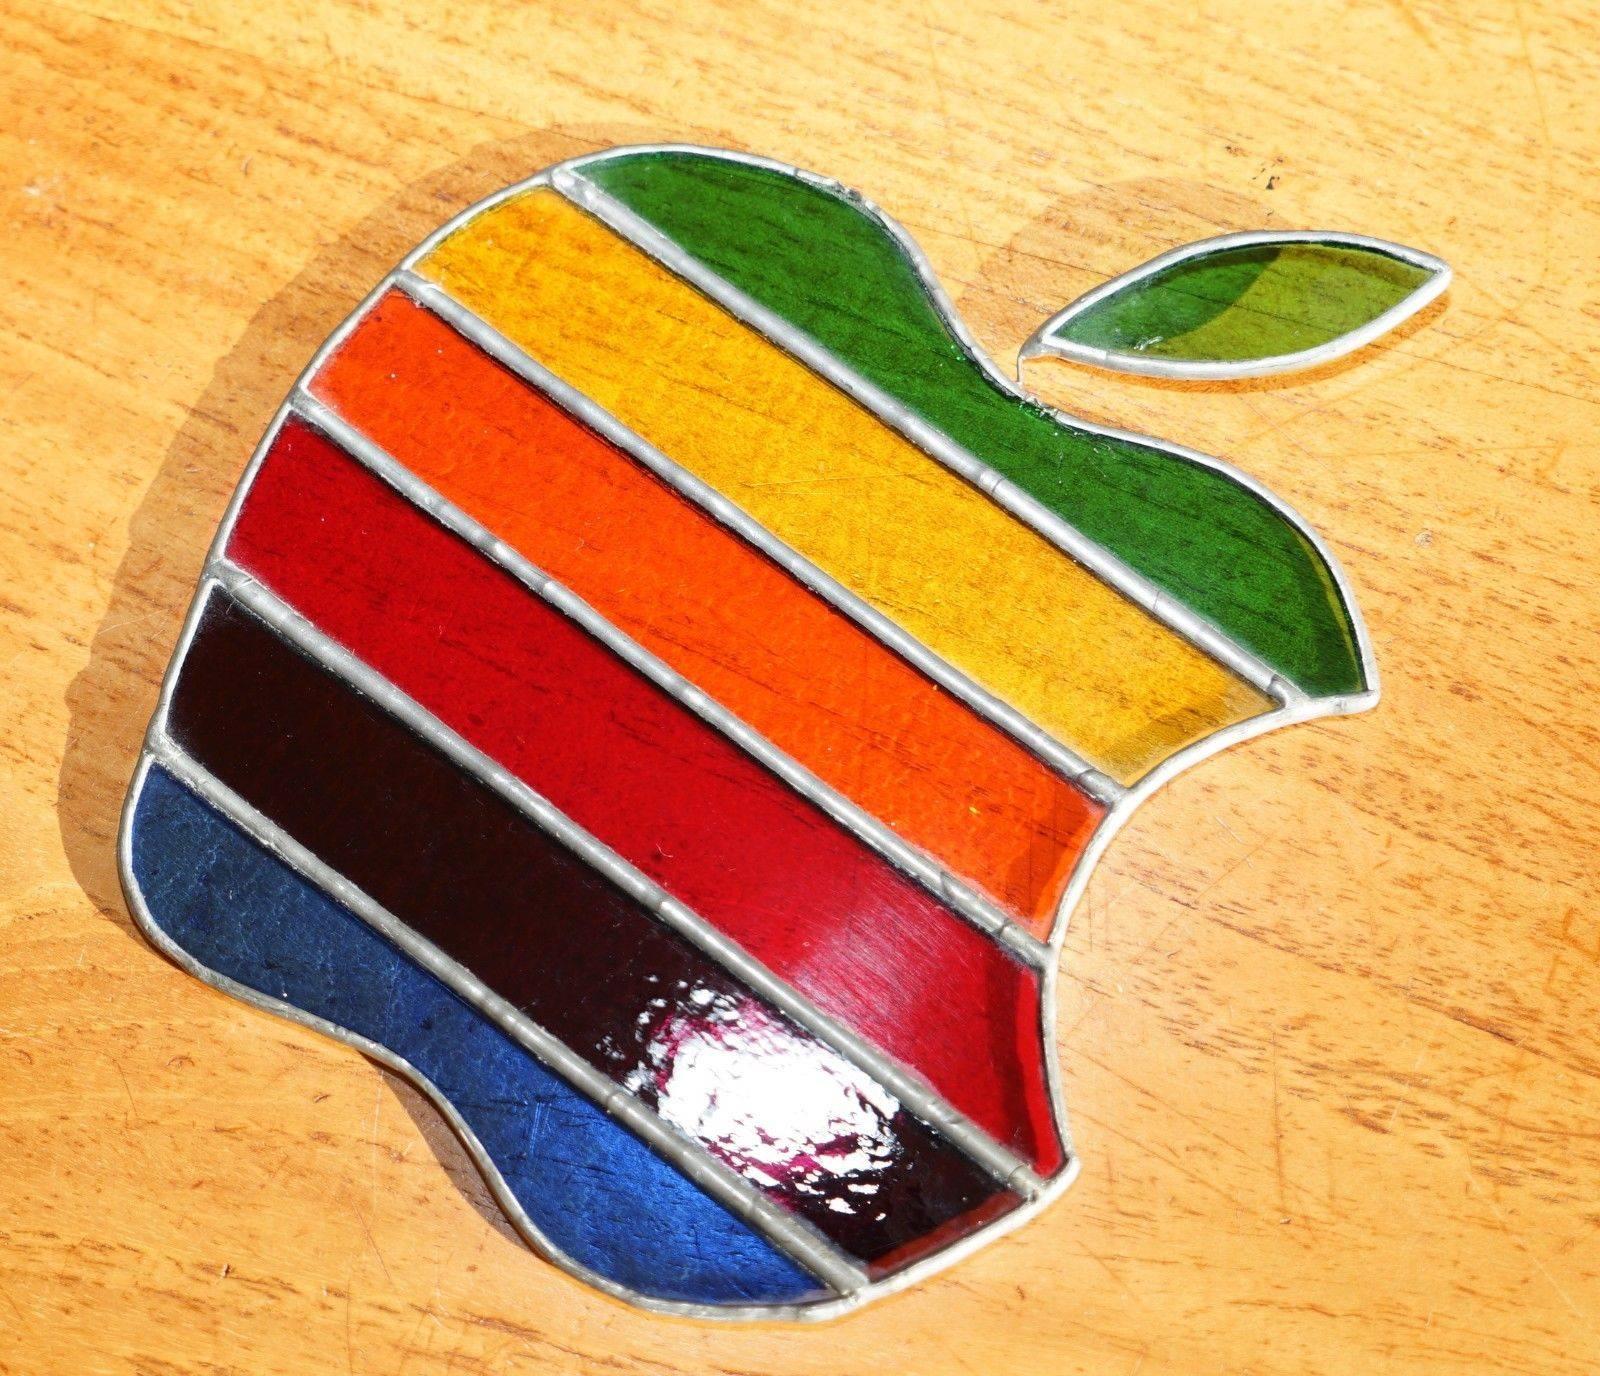 American Classical Rare Apple Mac Computers Memorabilia Stained Glass Logo & Stand iPhone iPad iPod